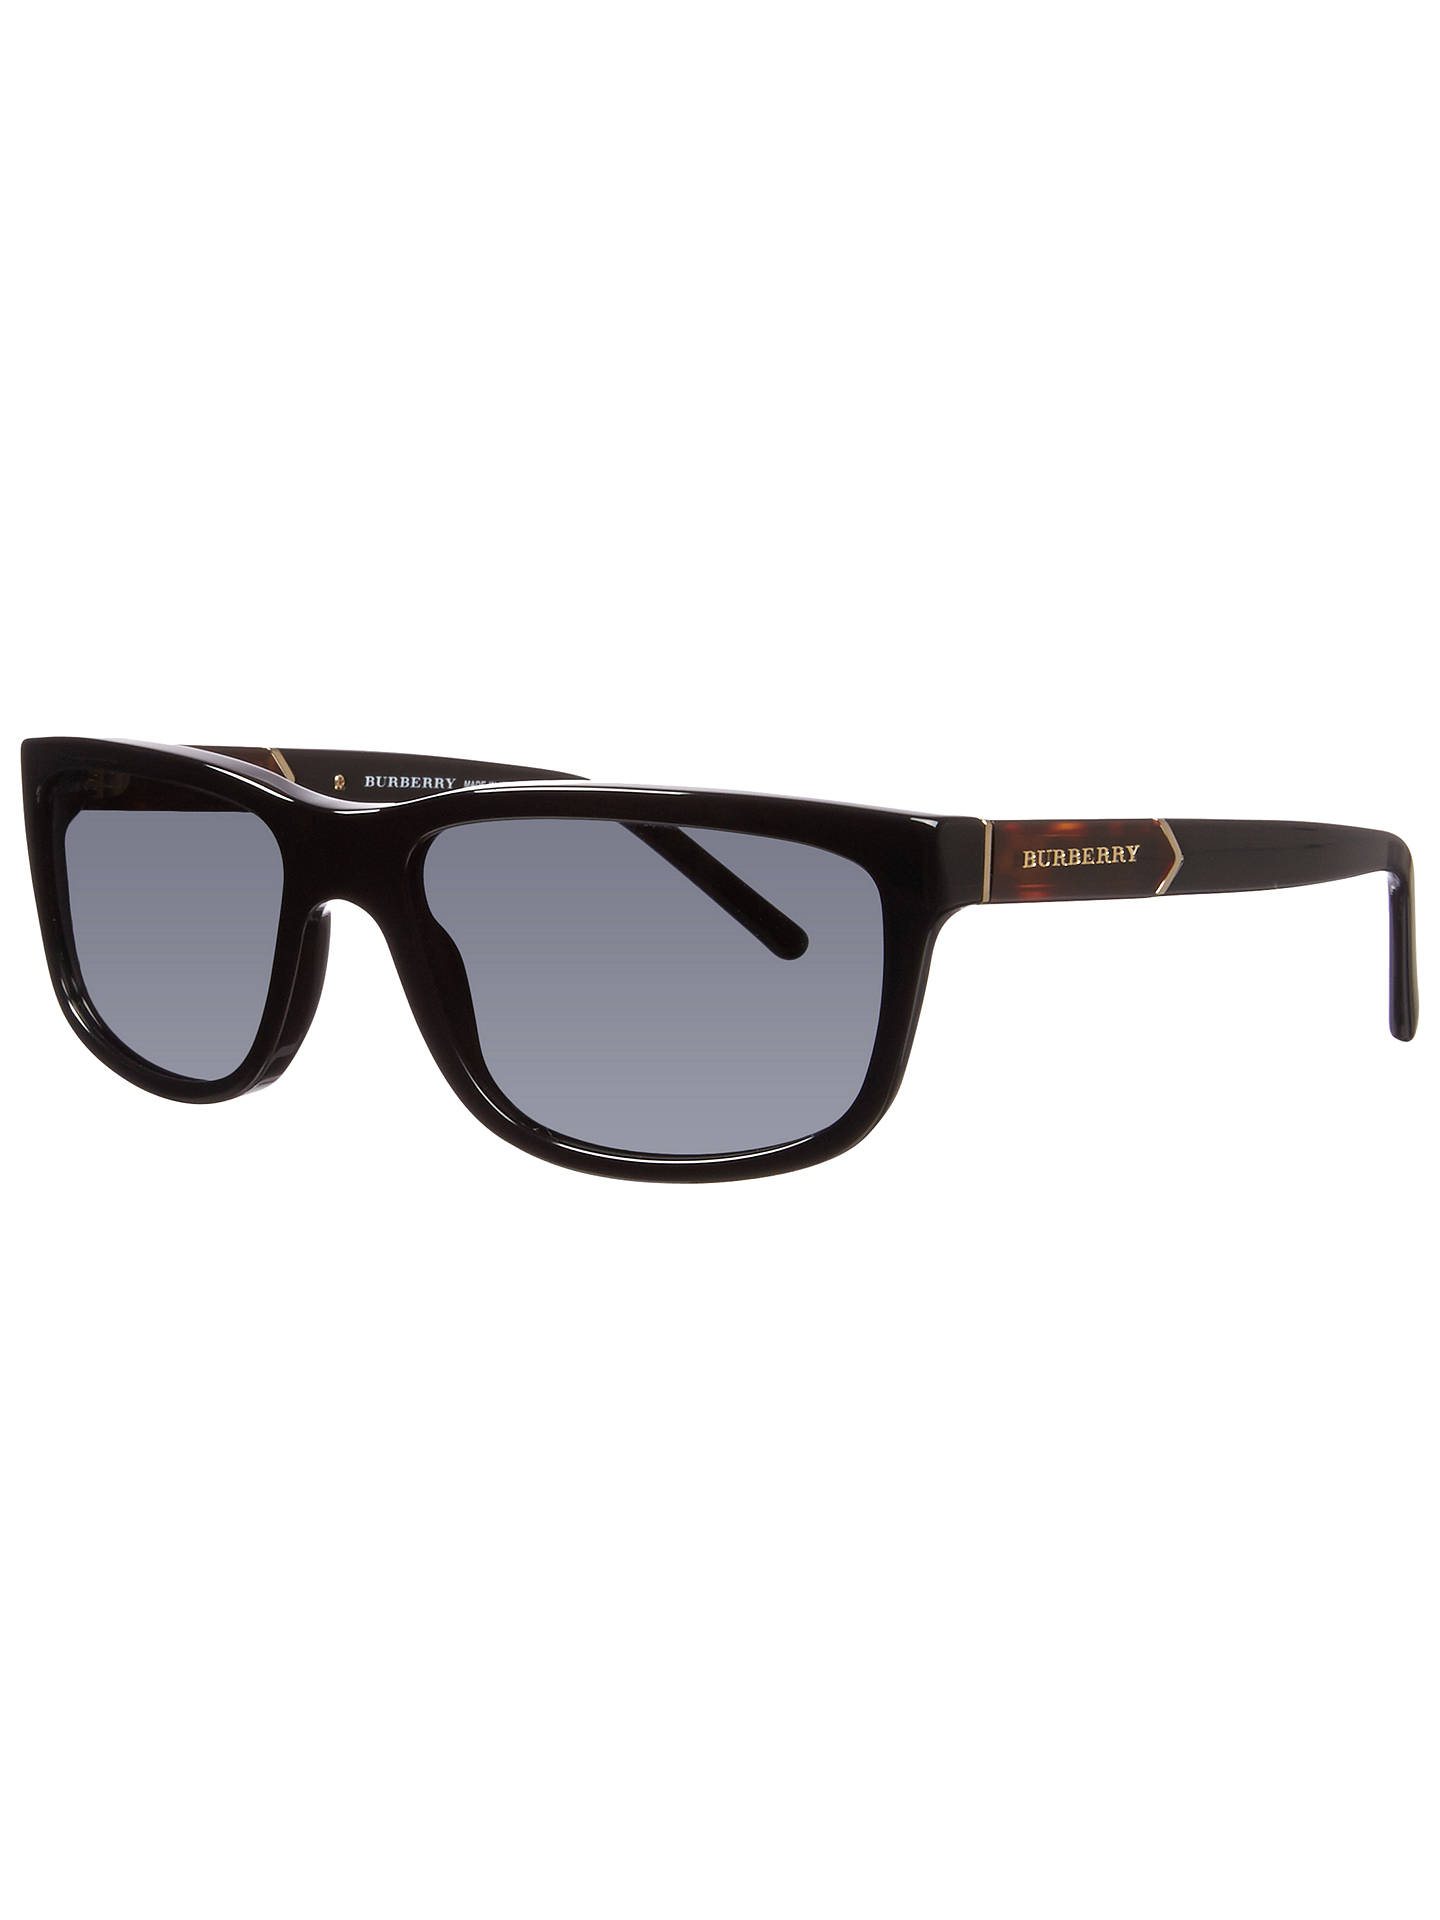 Burberry BE4155 Rectangular Sunglasses at John Lewis & Partners